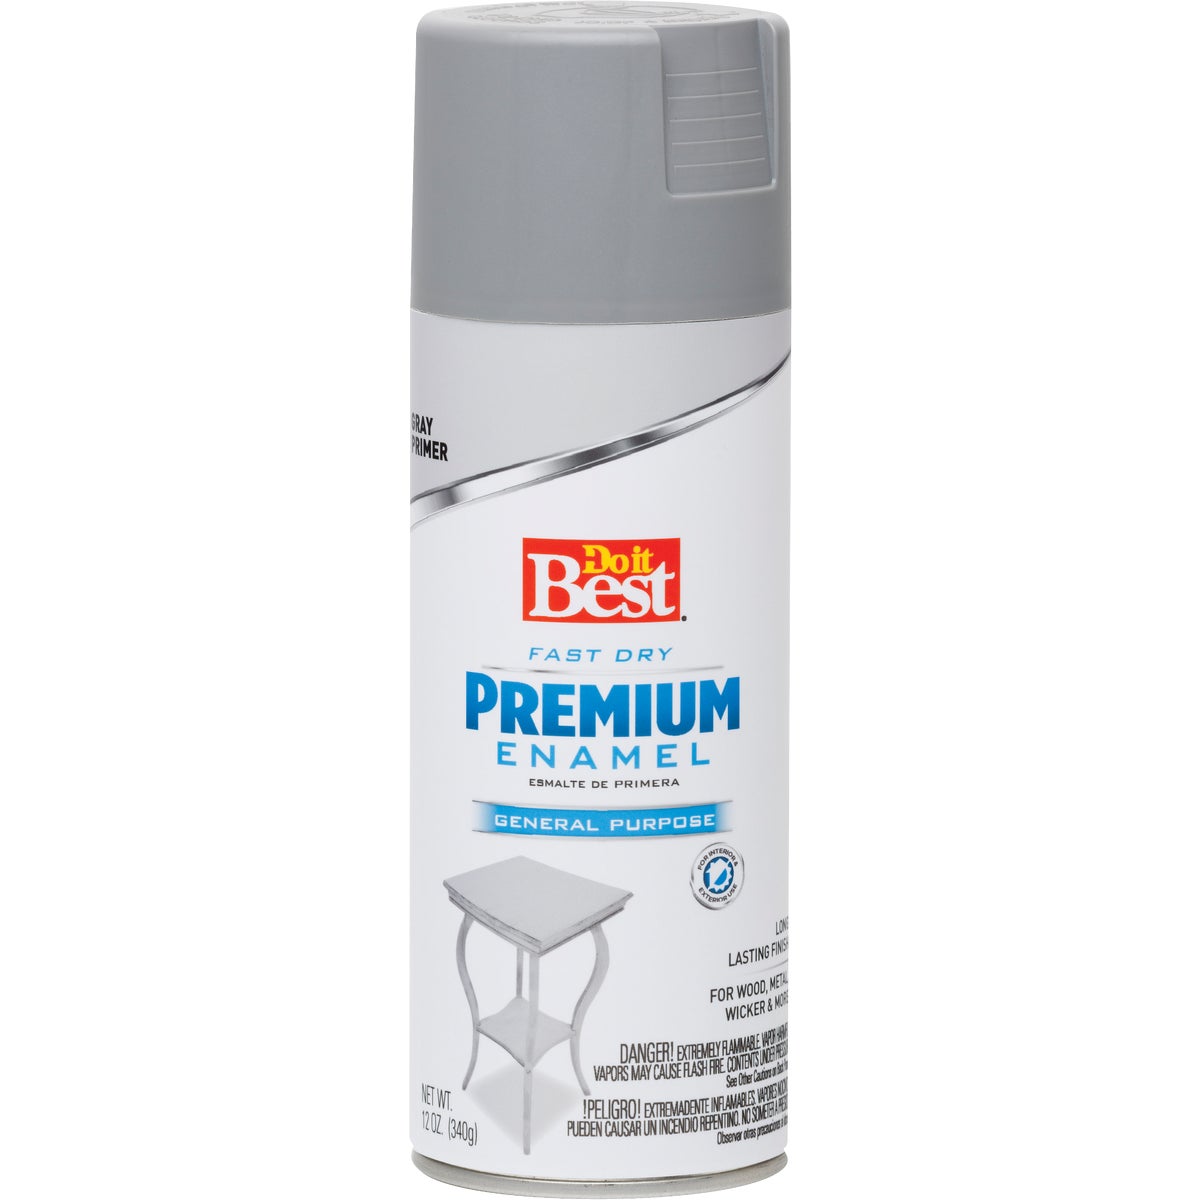 Item 770736, Premium alkyd enamel general-purpose aerosol paints are formulated for 